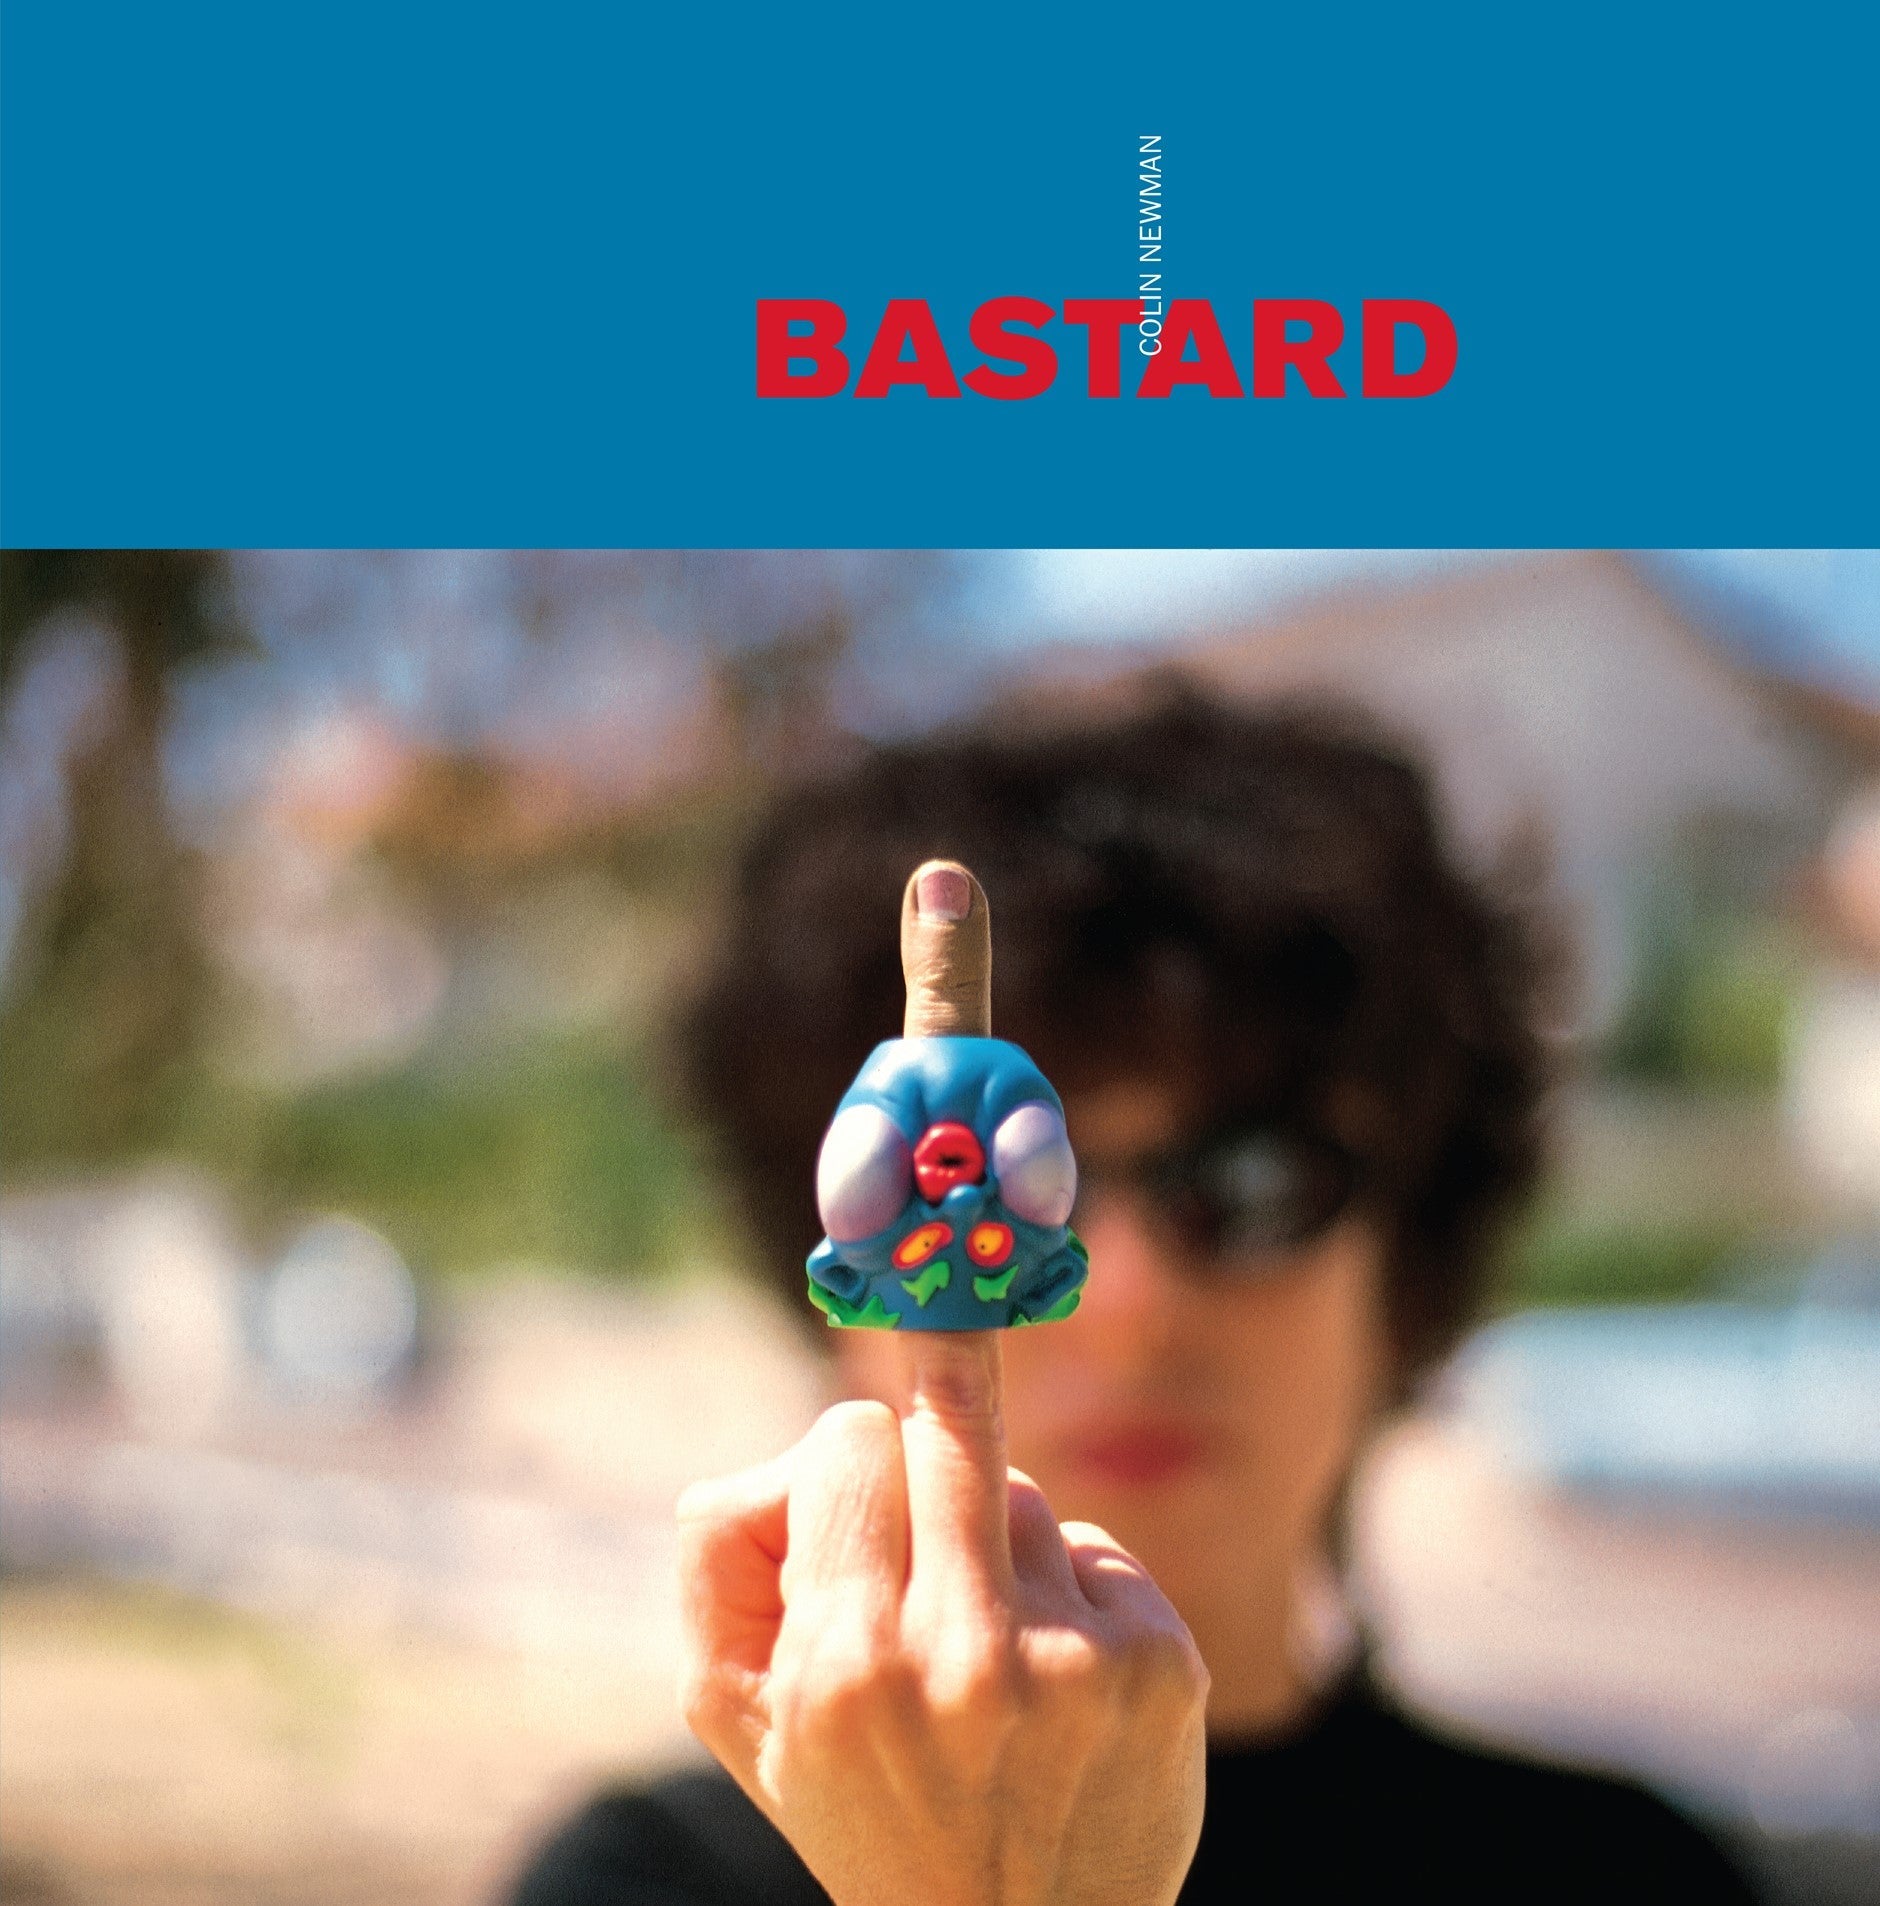 Bastard: Bio-Vinyl LP + Signed Print